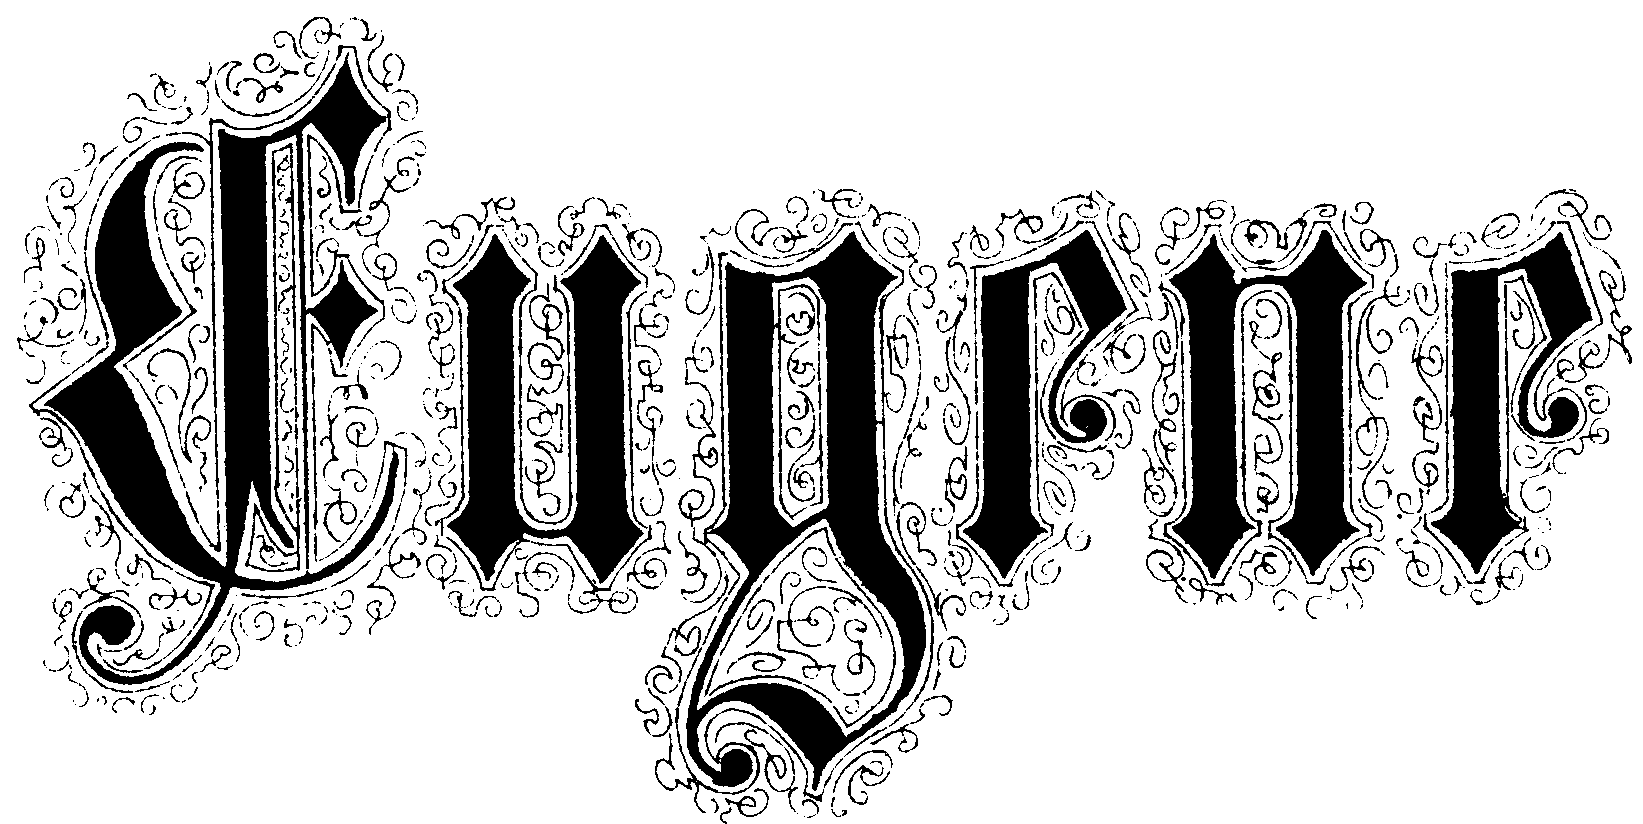 Ornate Engraving Closeup 2